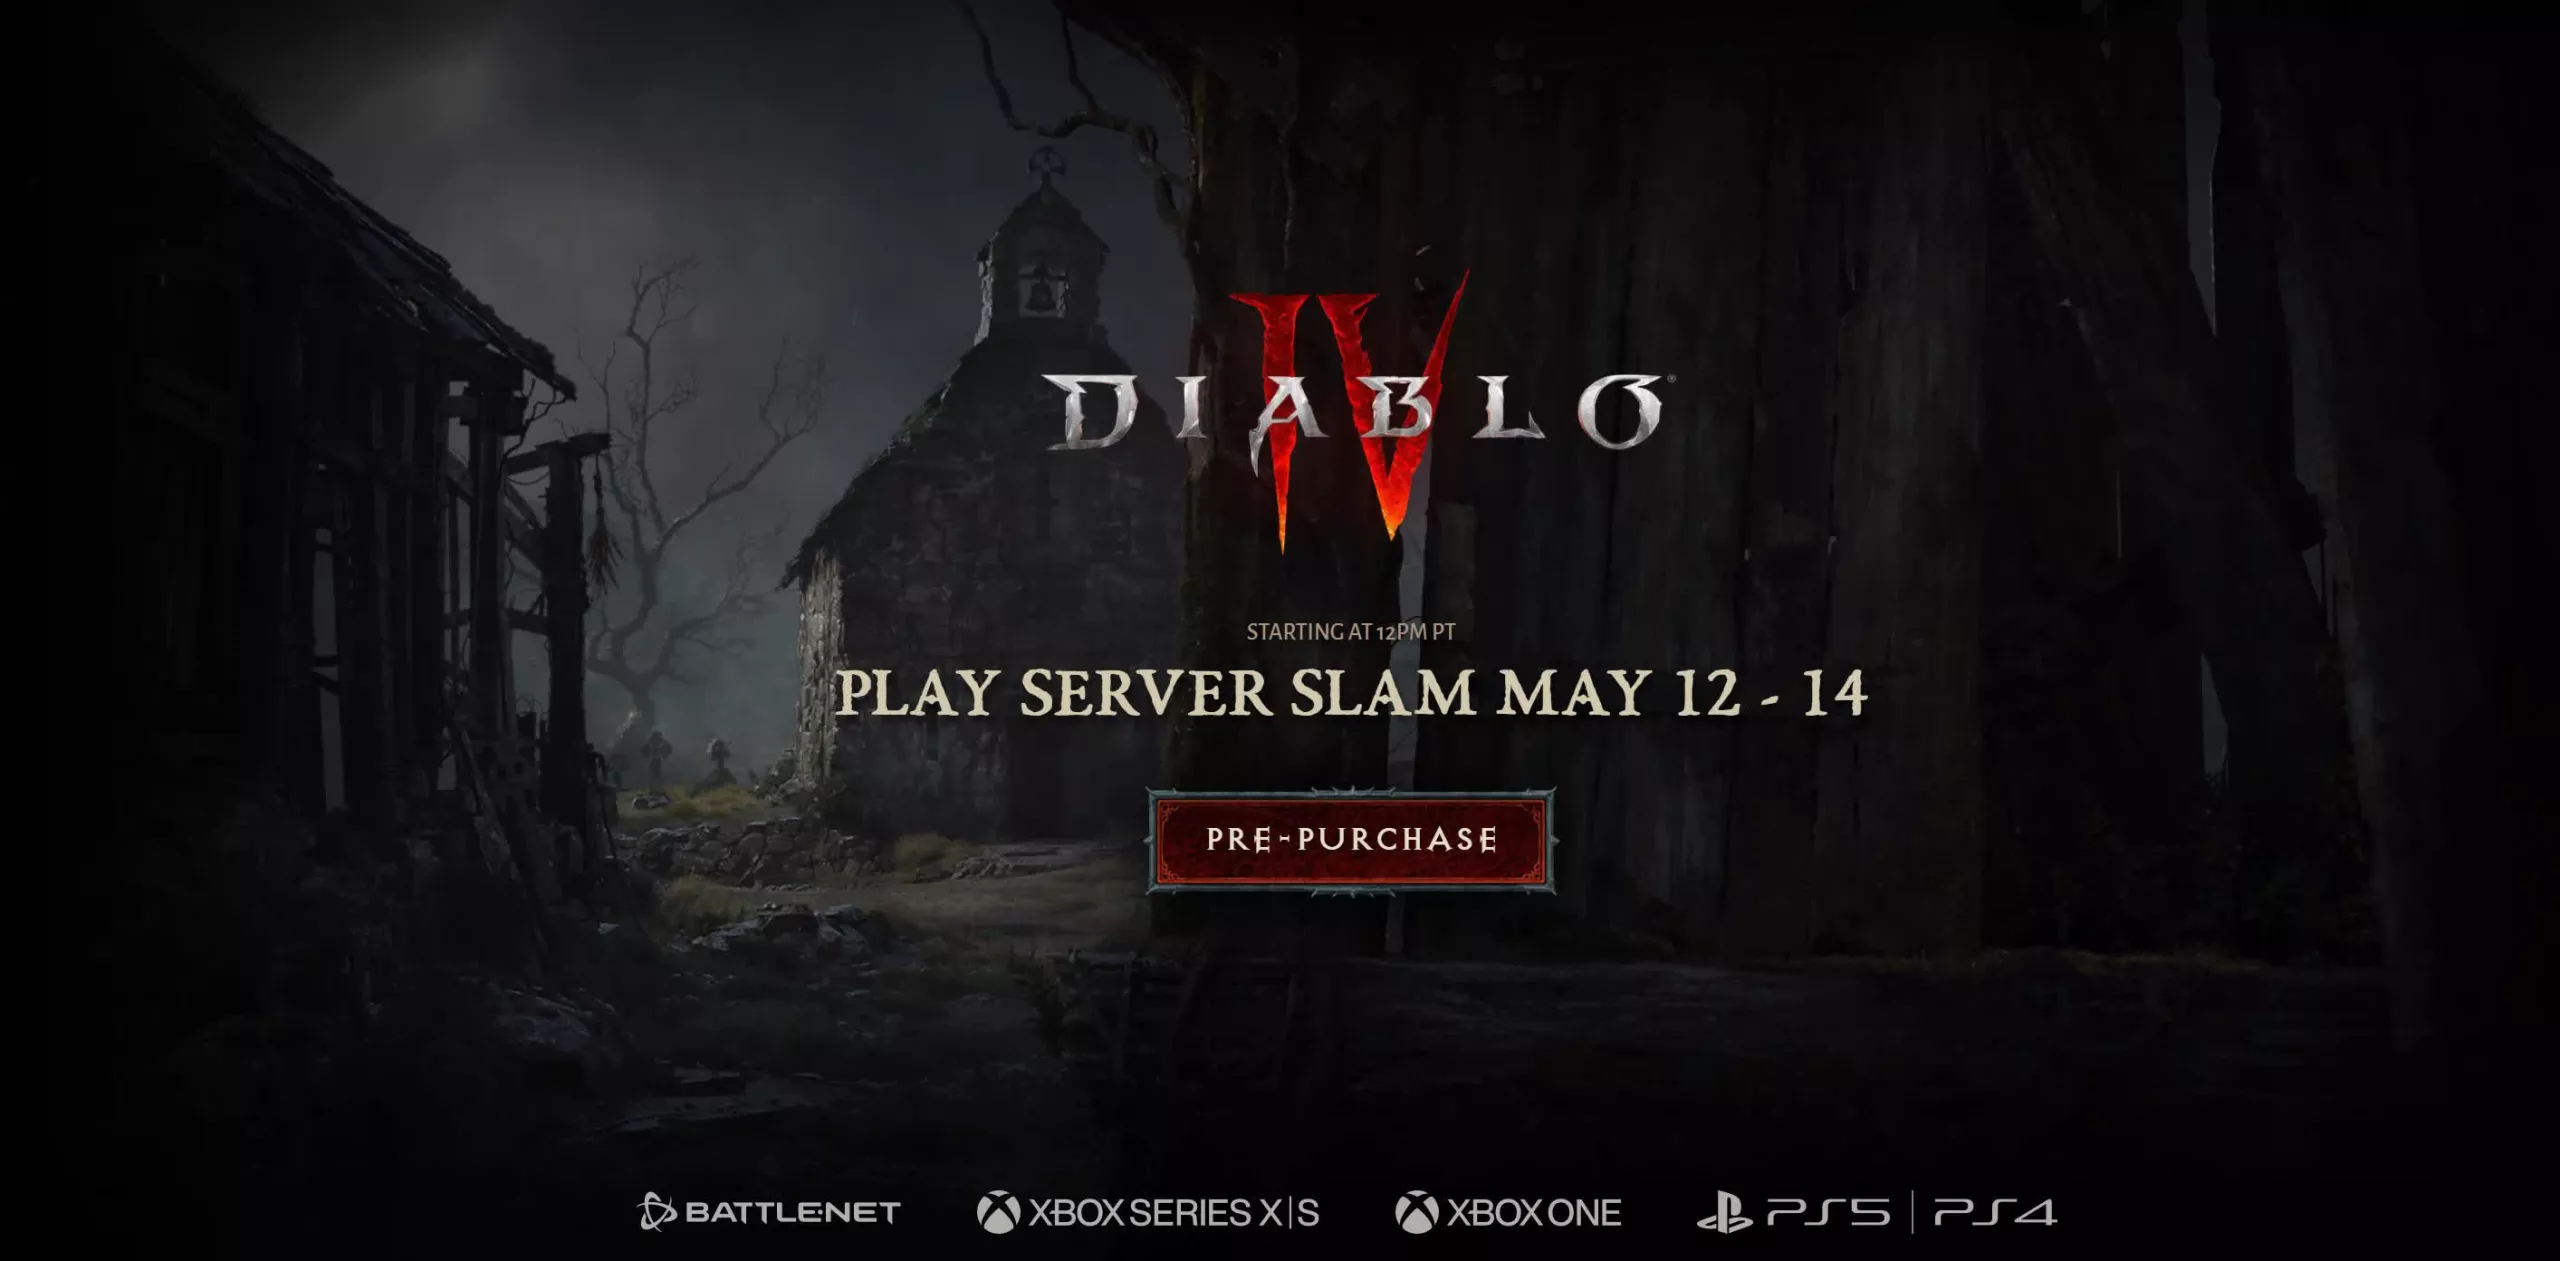 Diablo IV is receiving another open demo in May